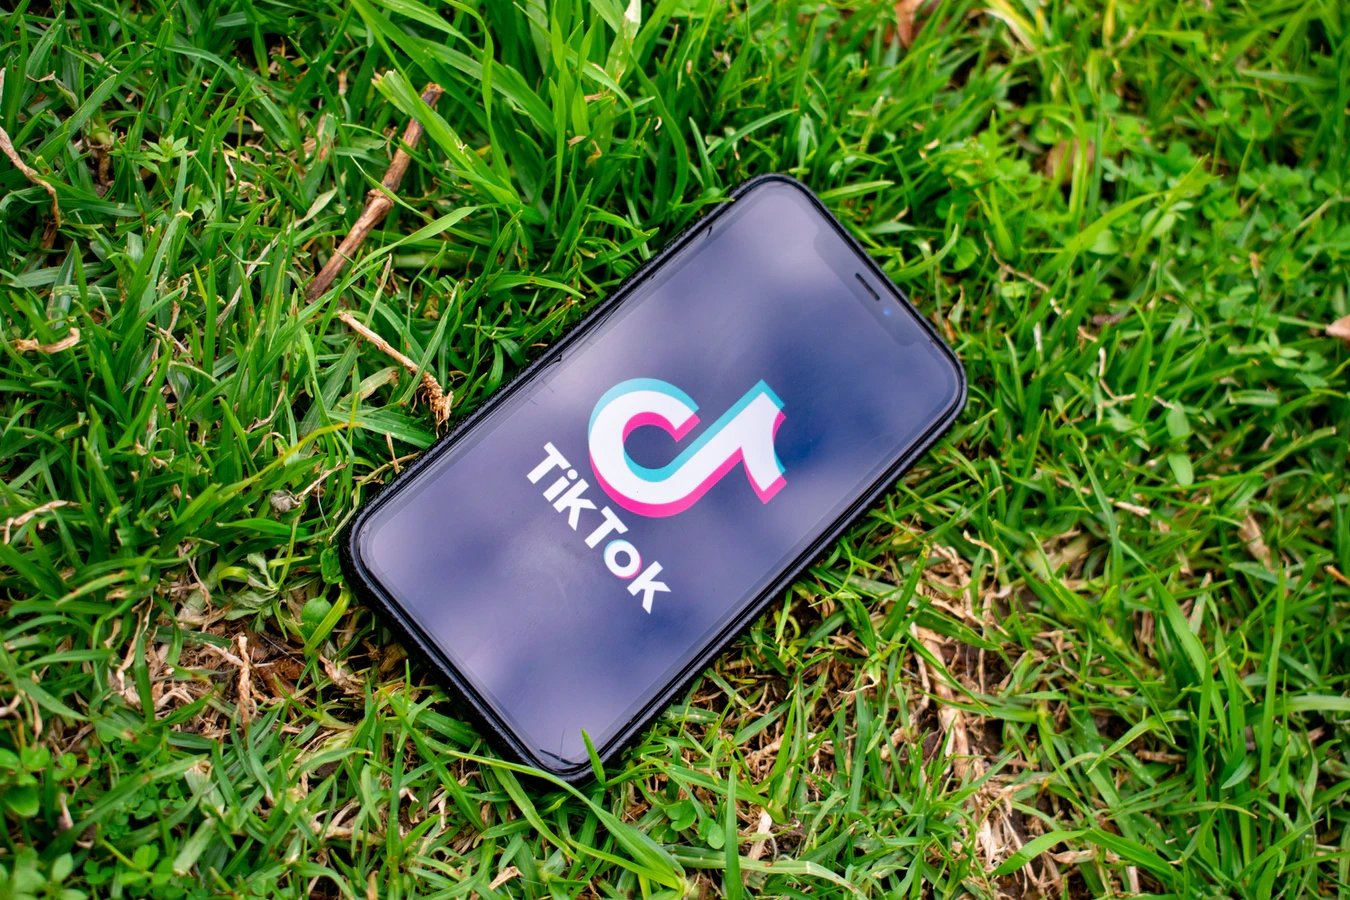 TikTok app smartphone